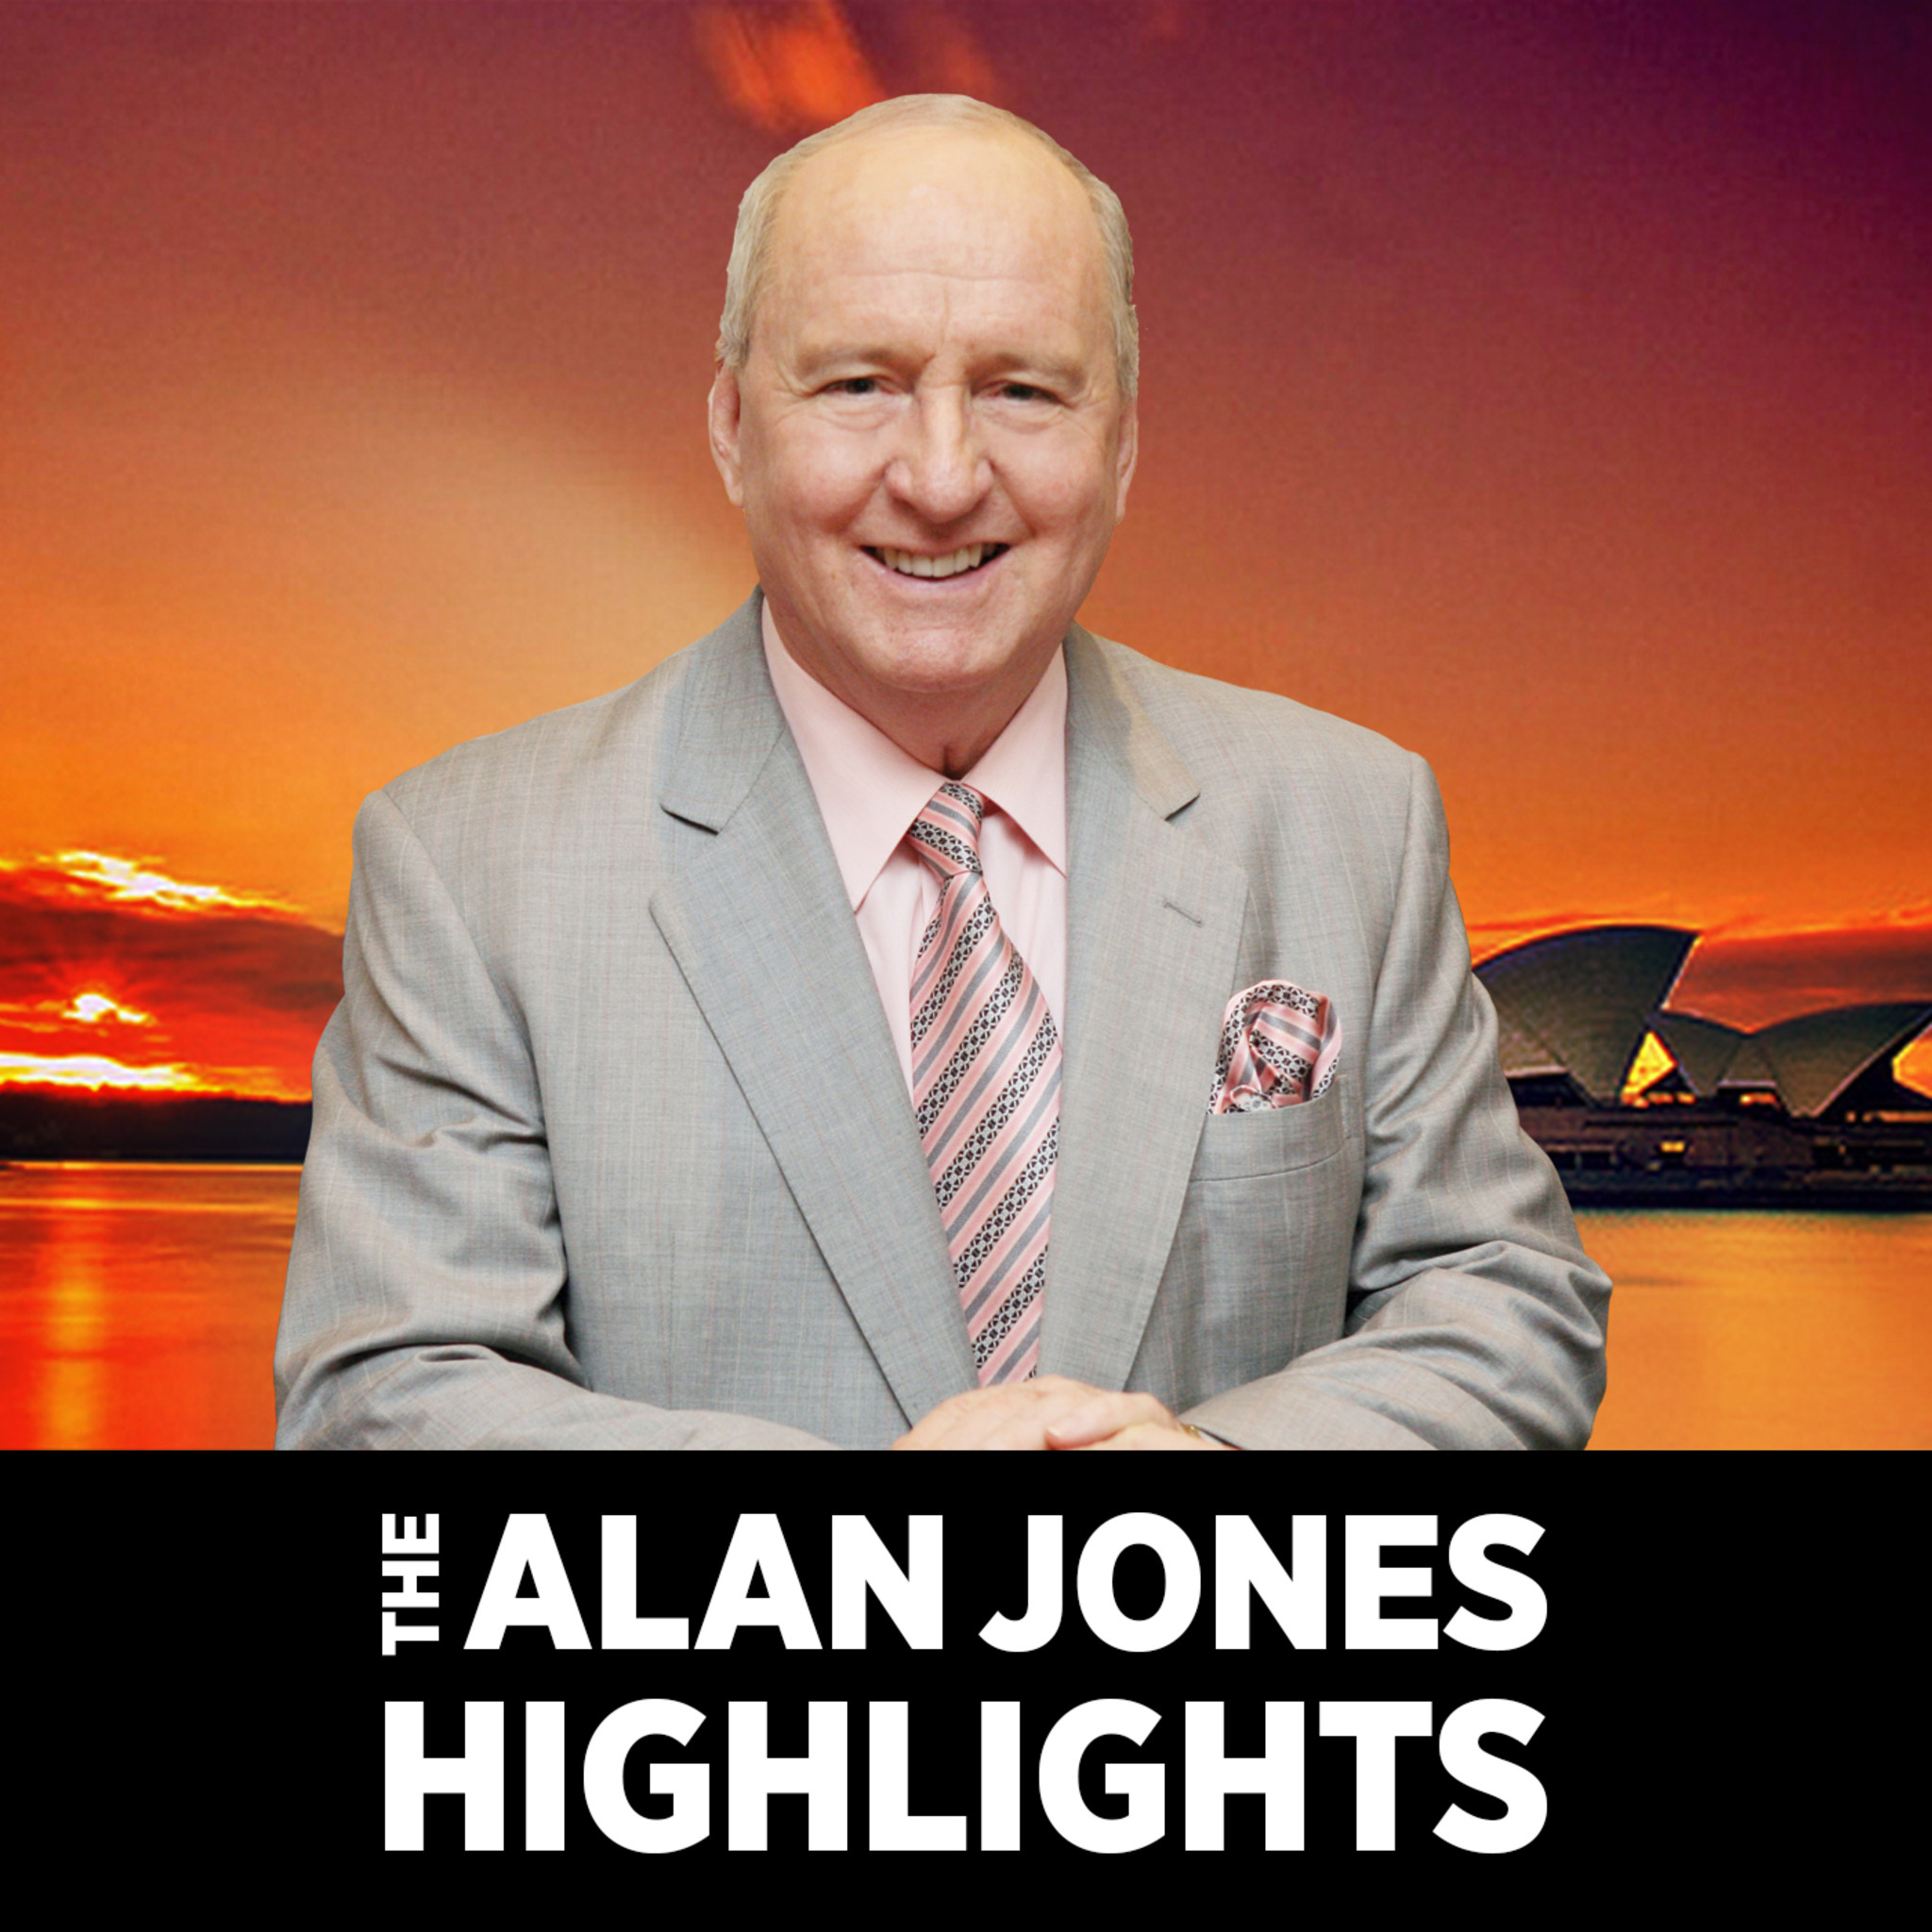 The Alan Jones Breakfast show: Highlights